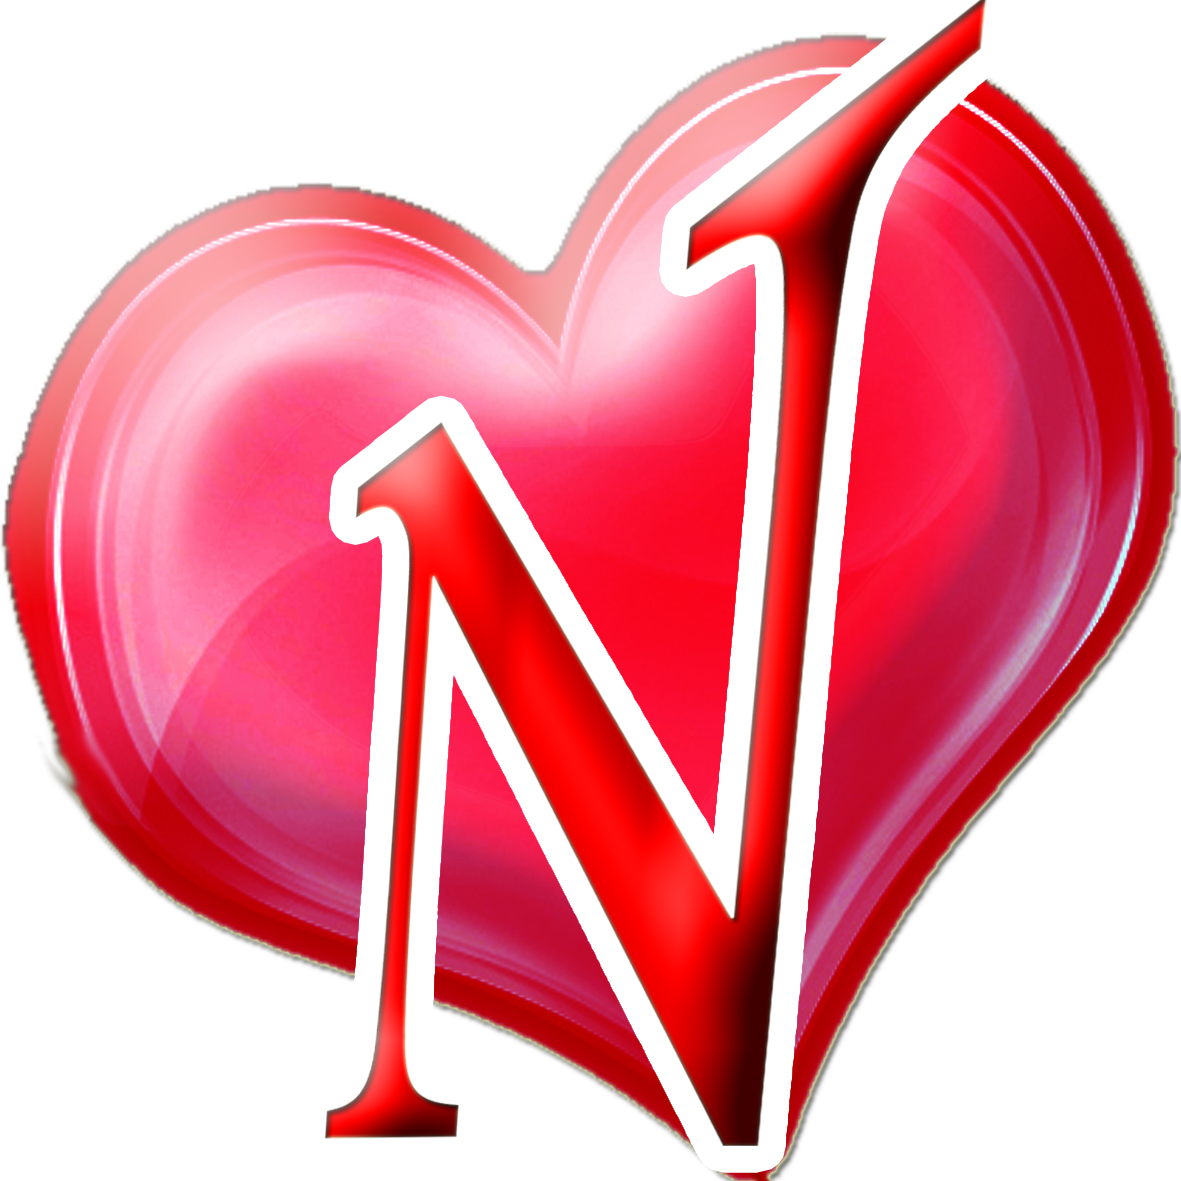 صور حرف N خلفيات حرف N خلفيات حرف N رومانسية اجمل حرف N في العالم حرف N